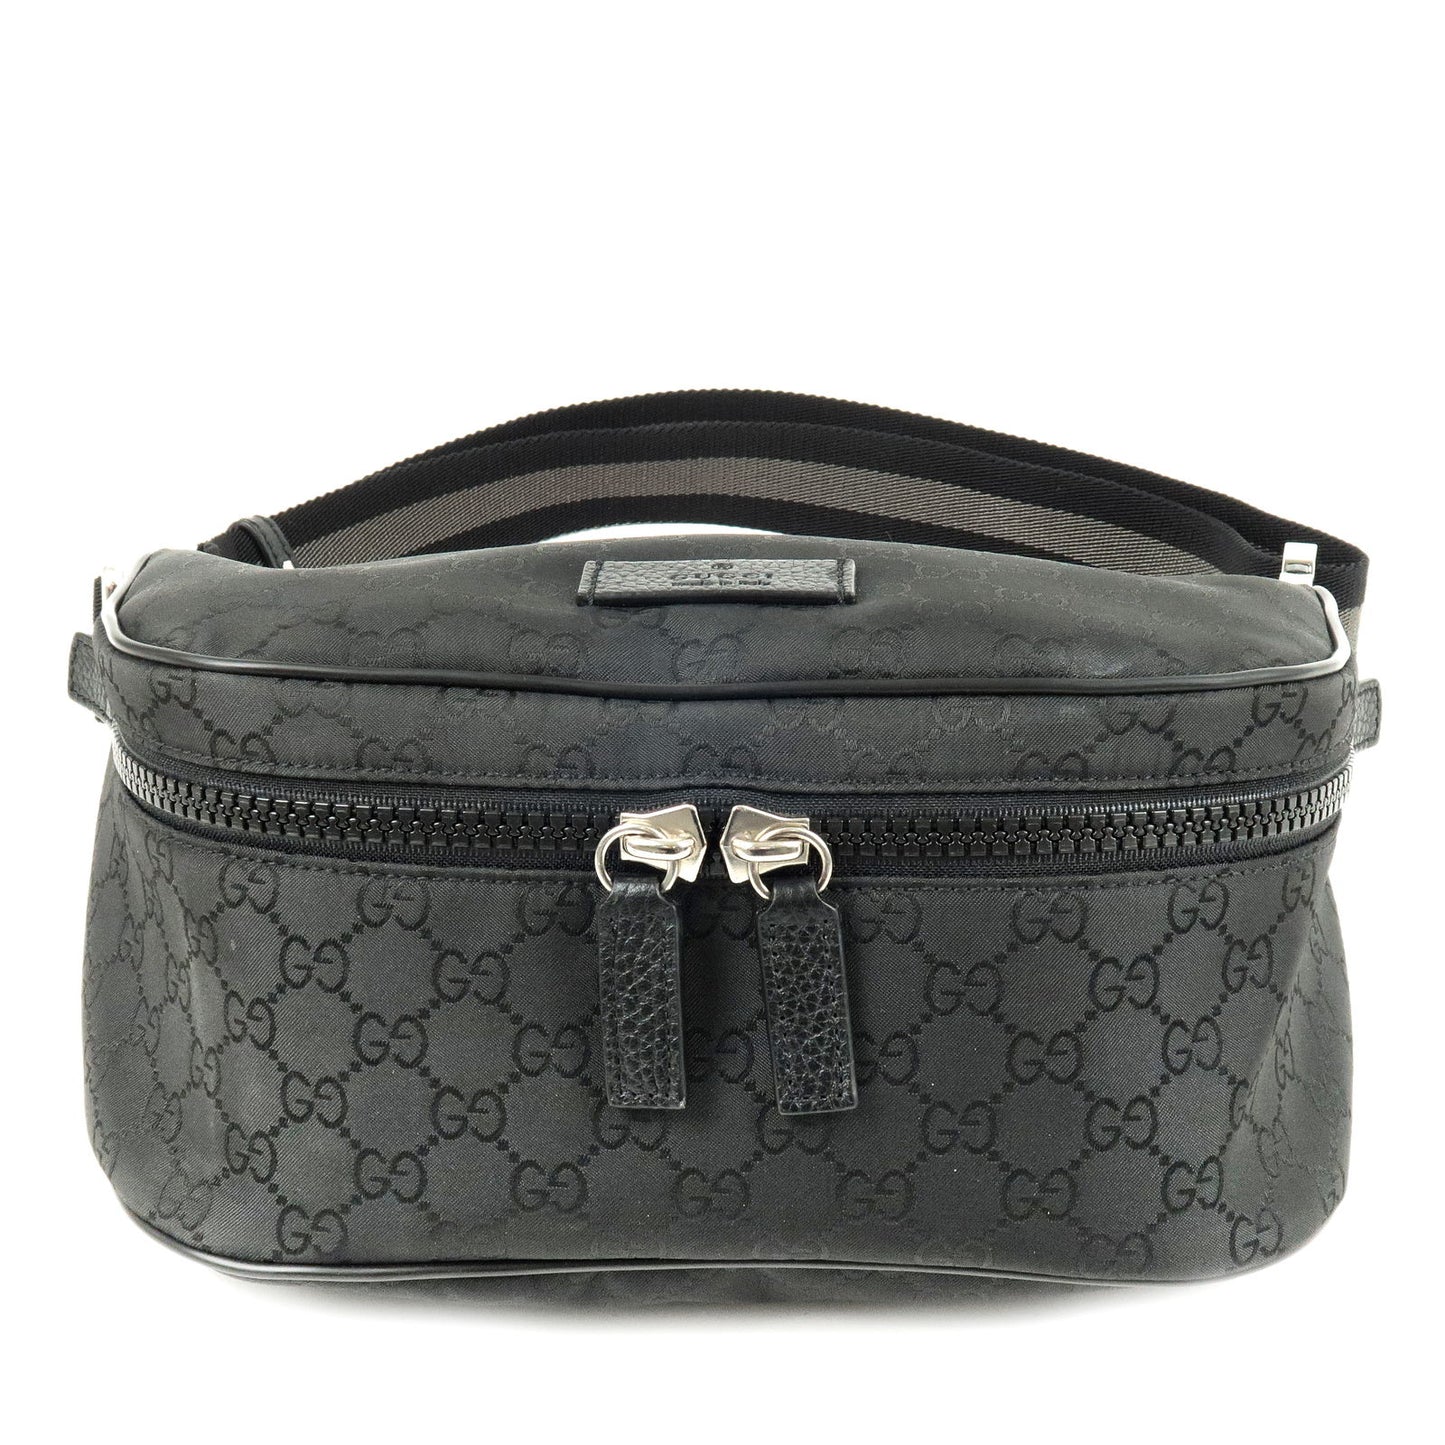 GUCCI-GG-Nylon-Leather-Body-Bag-Waist-Bag-Black-449182